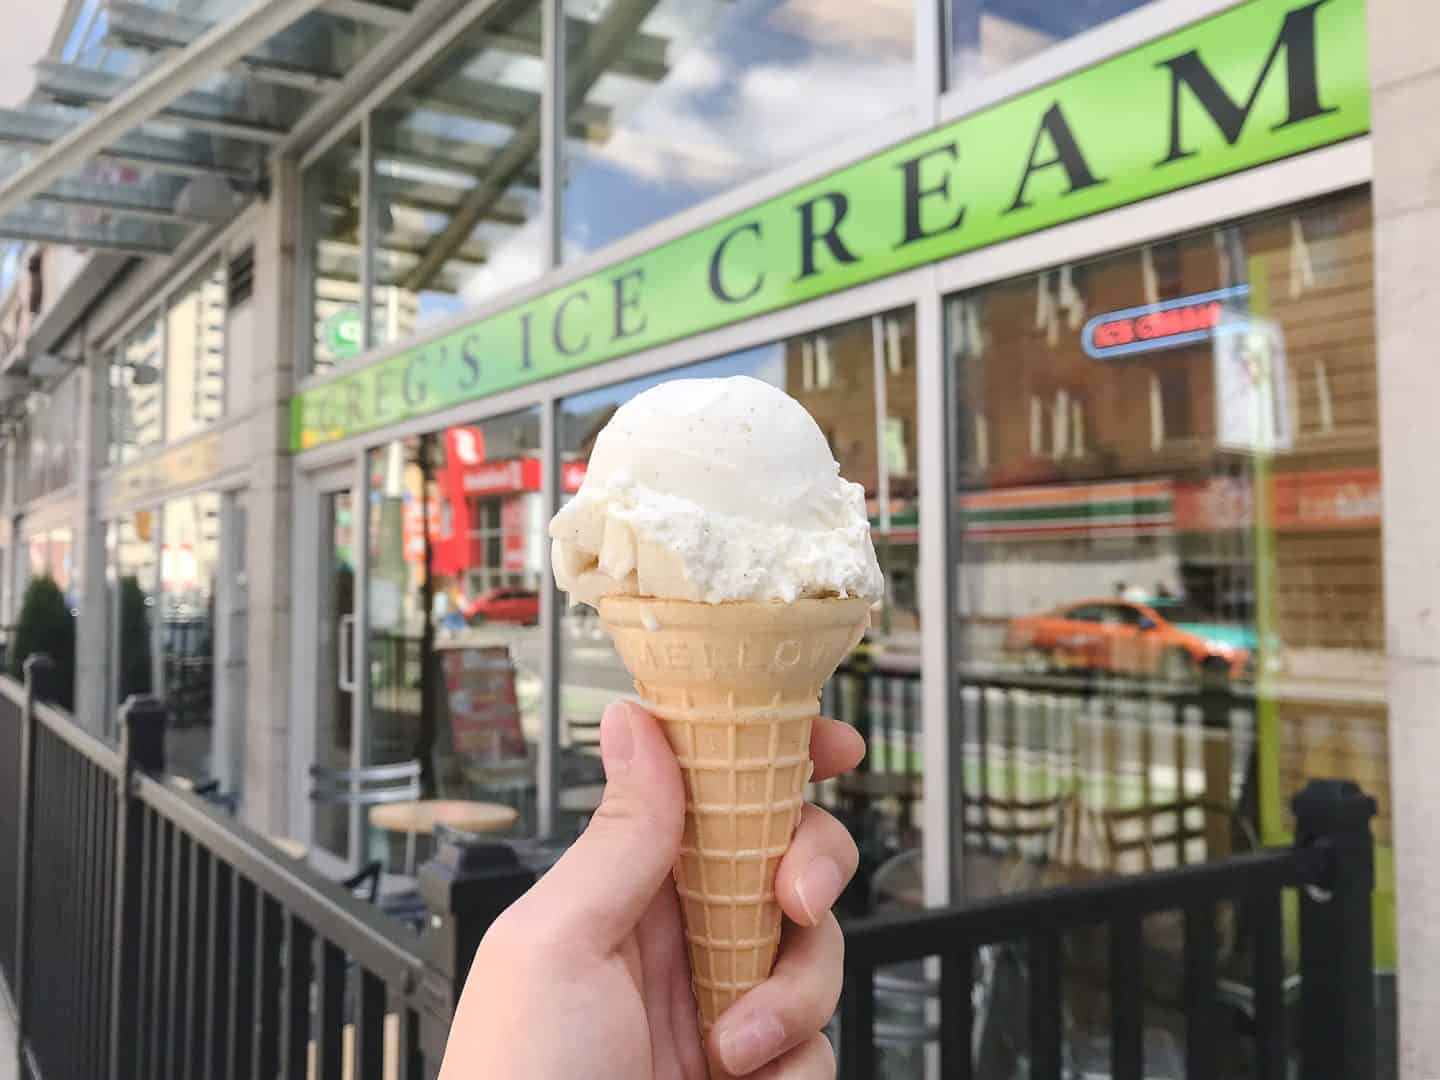 Greg's Ice Cream in Toronto